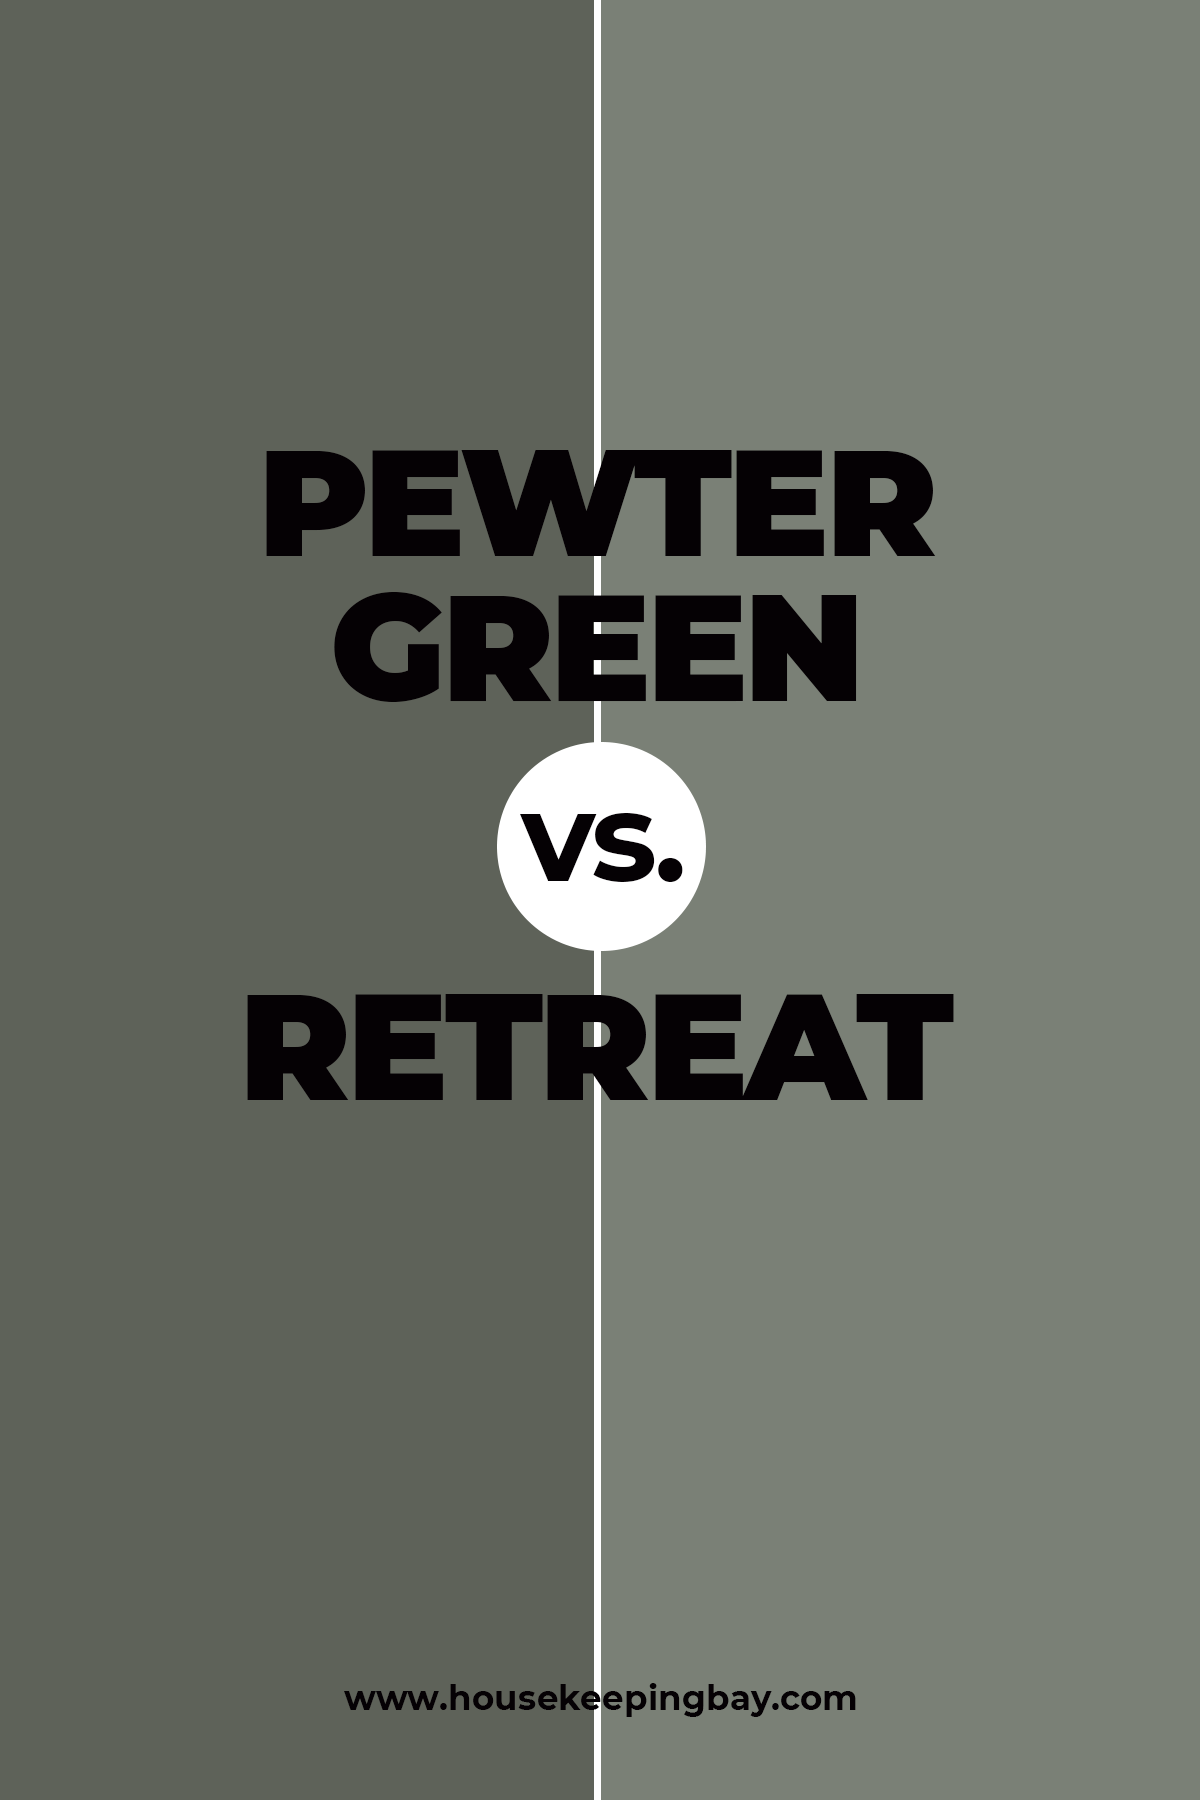 Pewter Green vs. Retreat